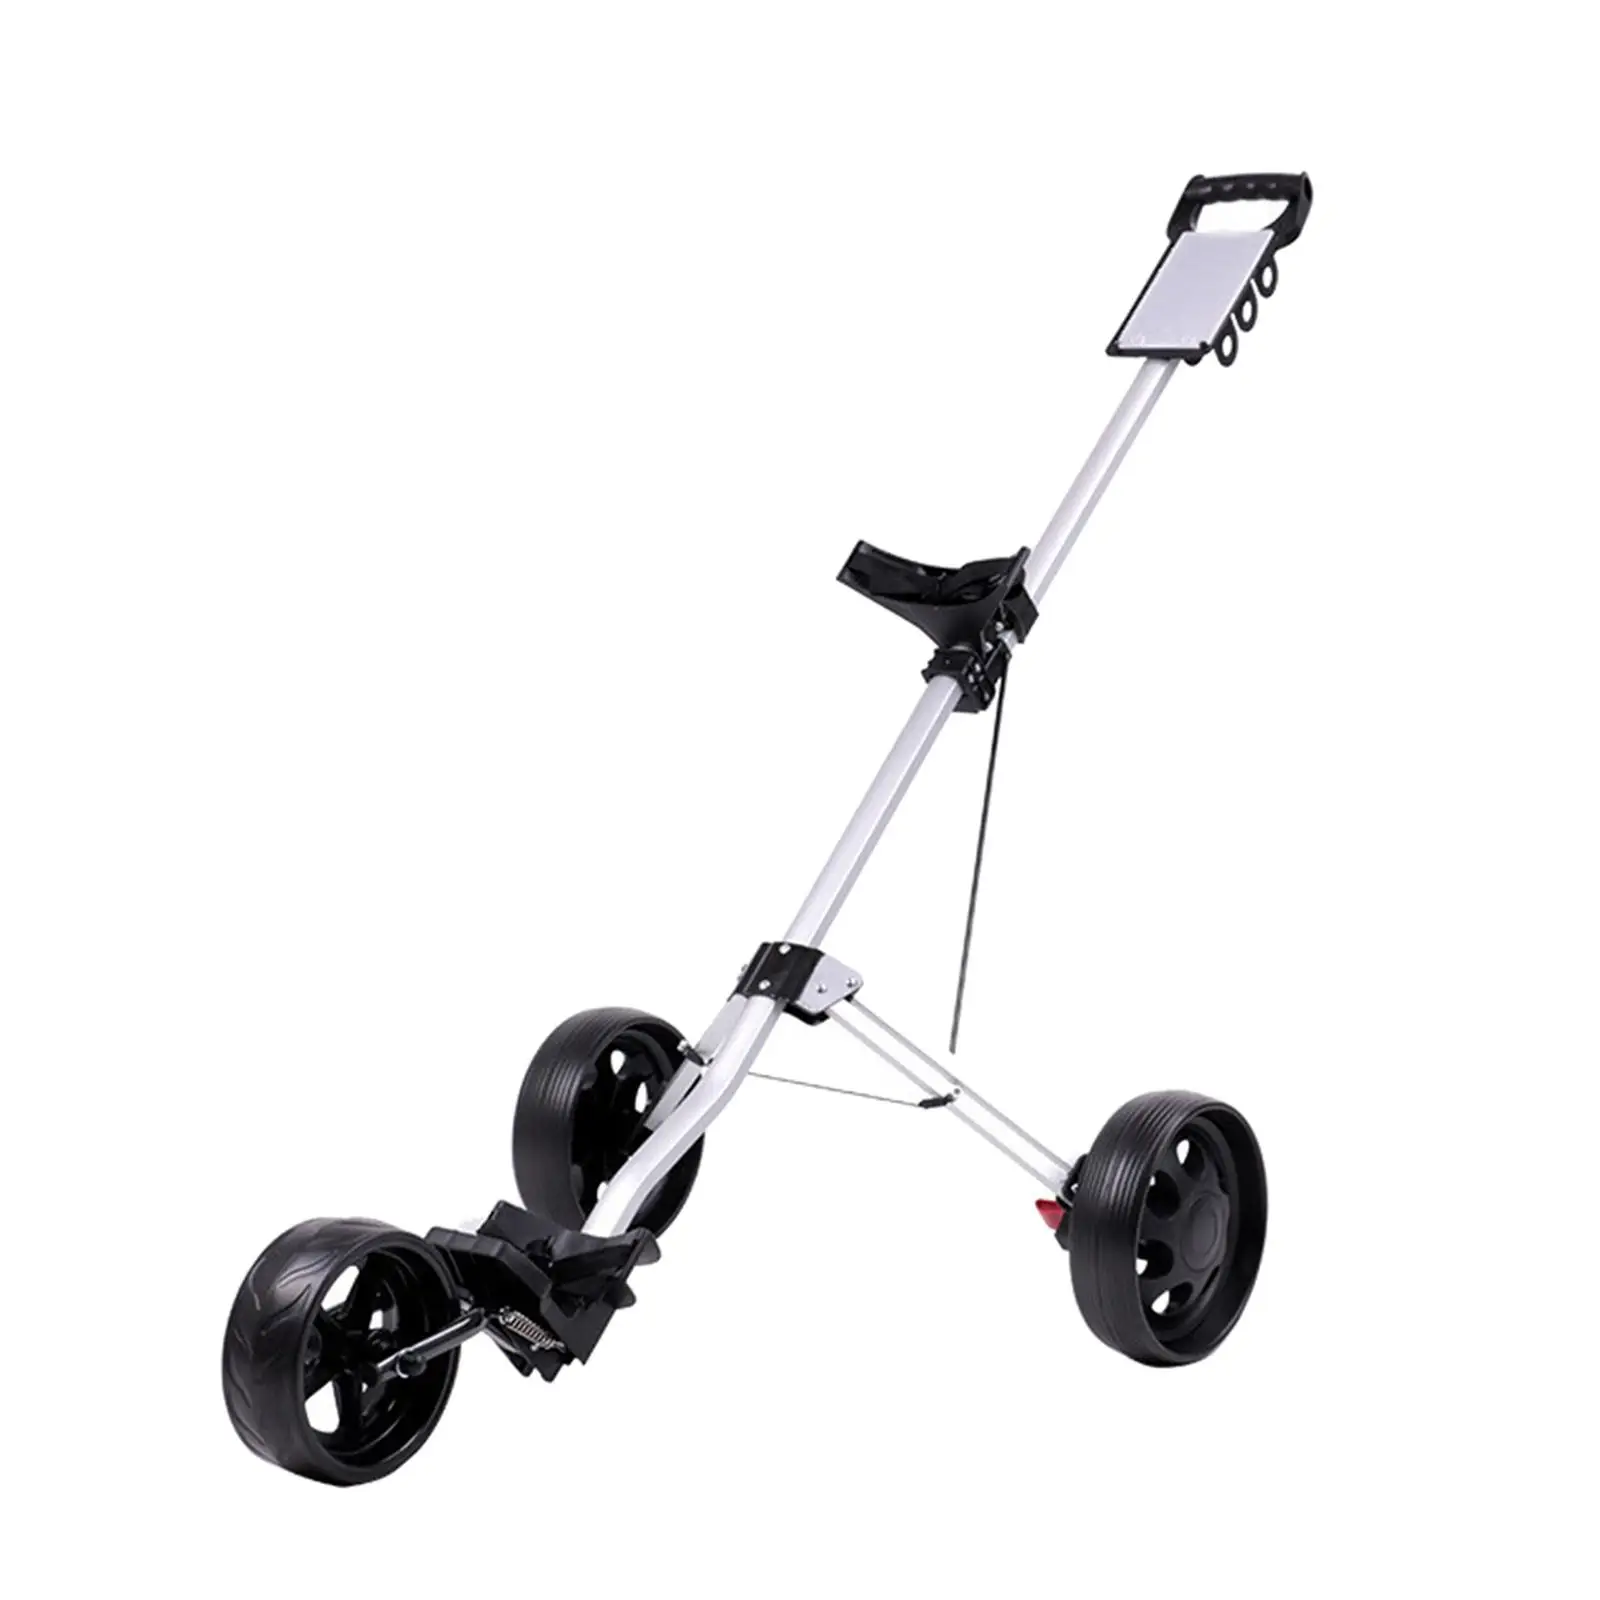 Push Pull Golf Cart Aluminum Alloy with Scoreboard 3 Wheeled Golf Accessories Folding Golf Push Trolley Golf Bag Carrier Cart